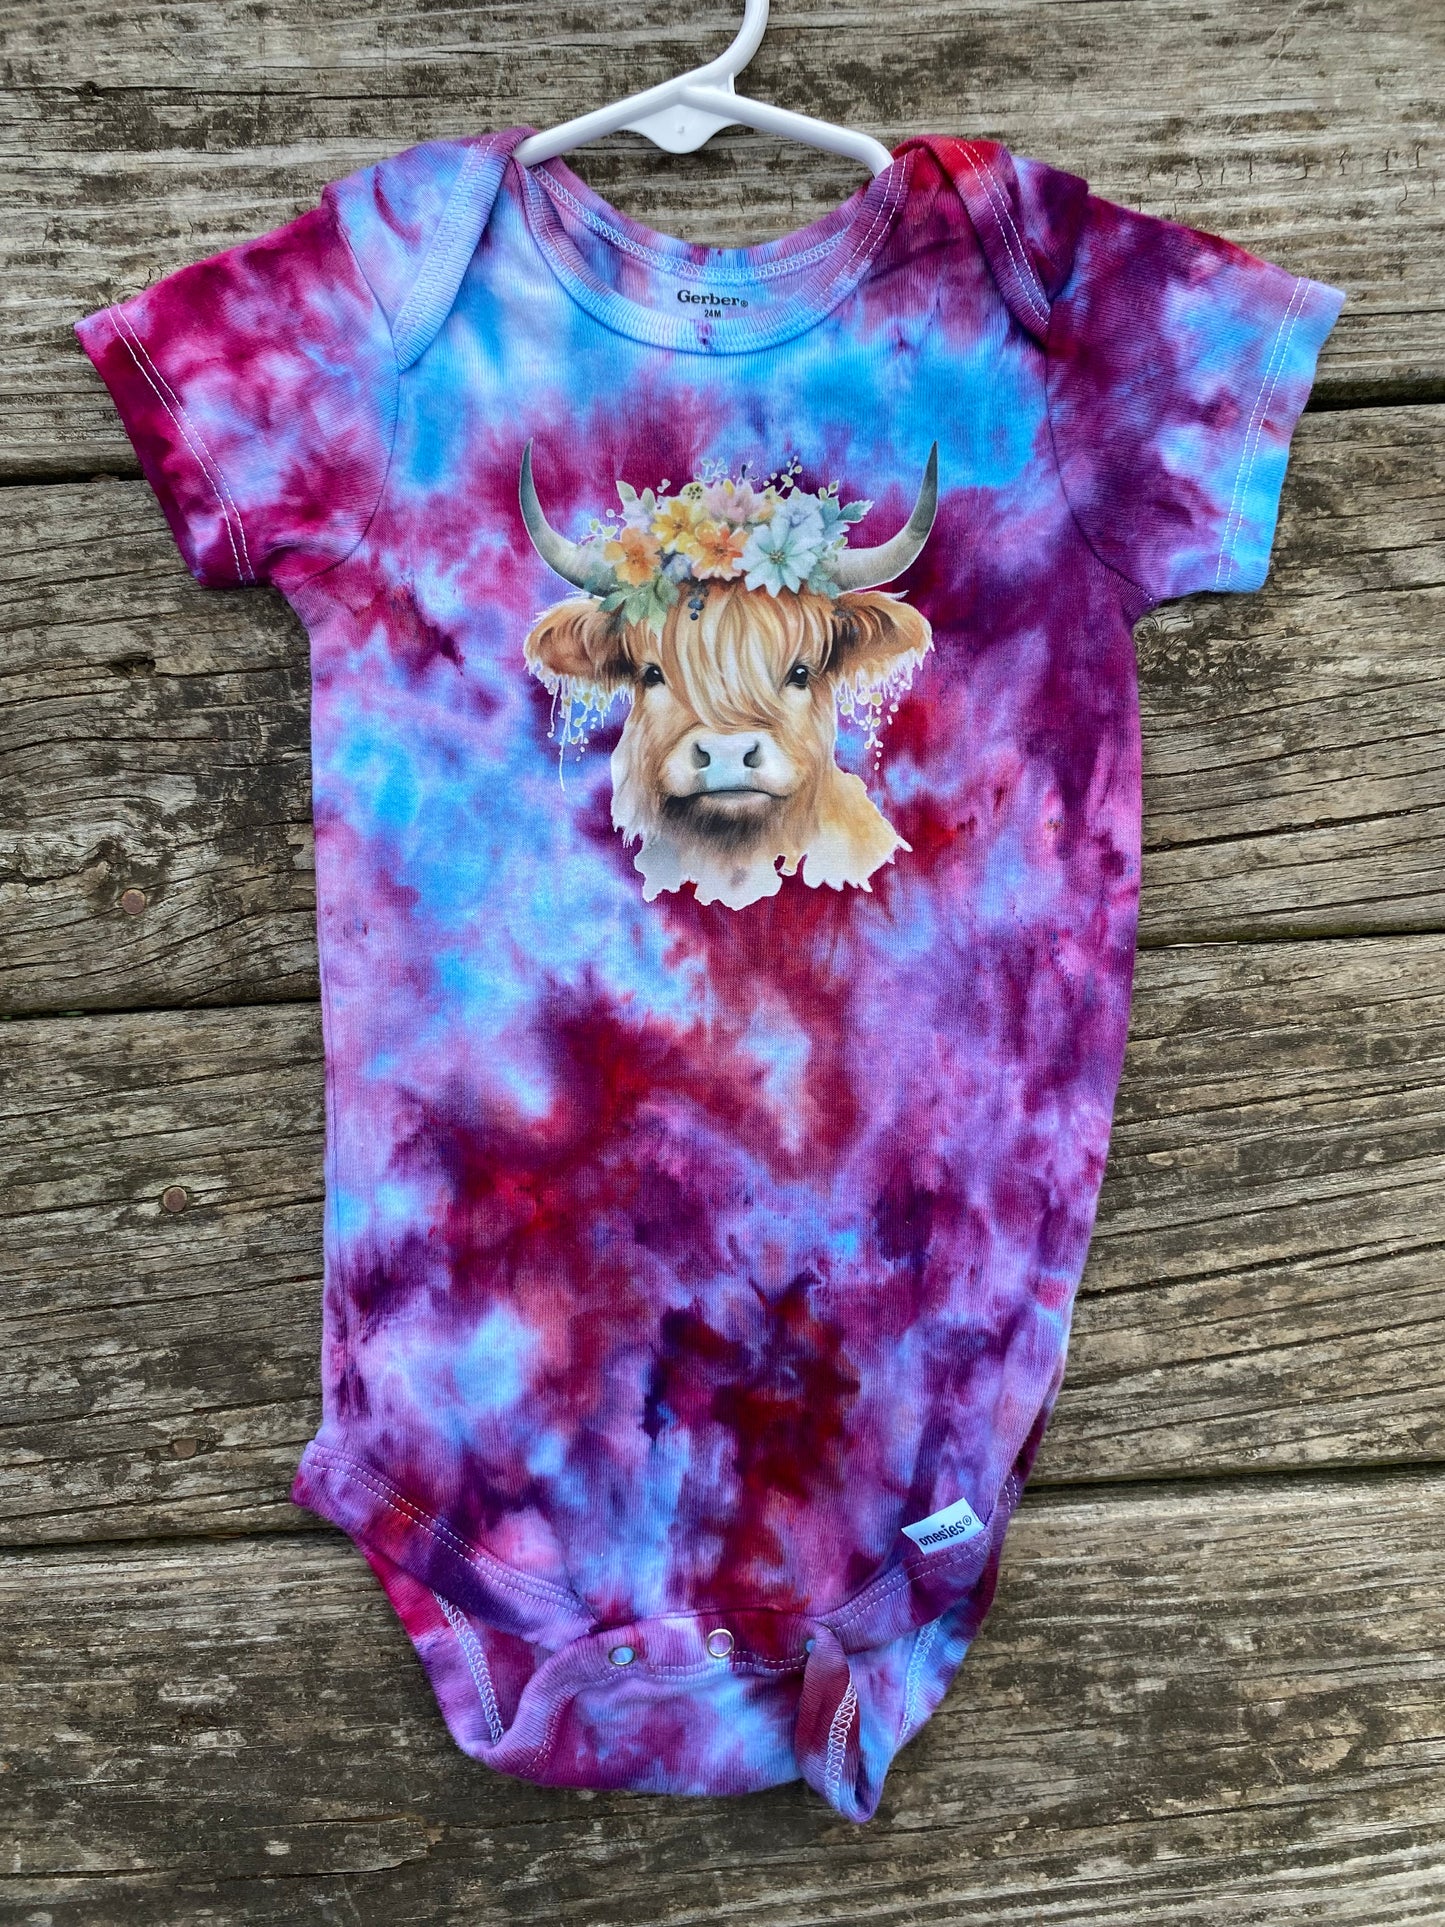 Gerber brand purples blues highland cow baby bodysuit 24 month